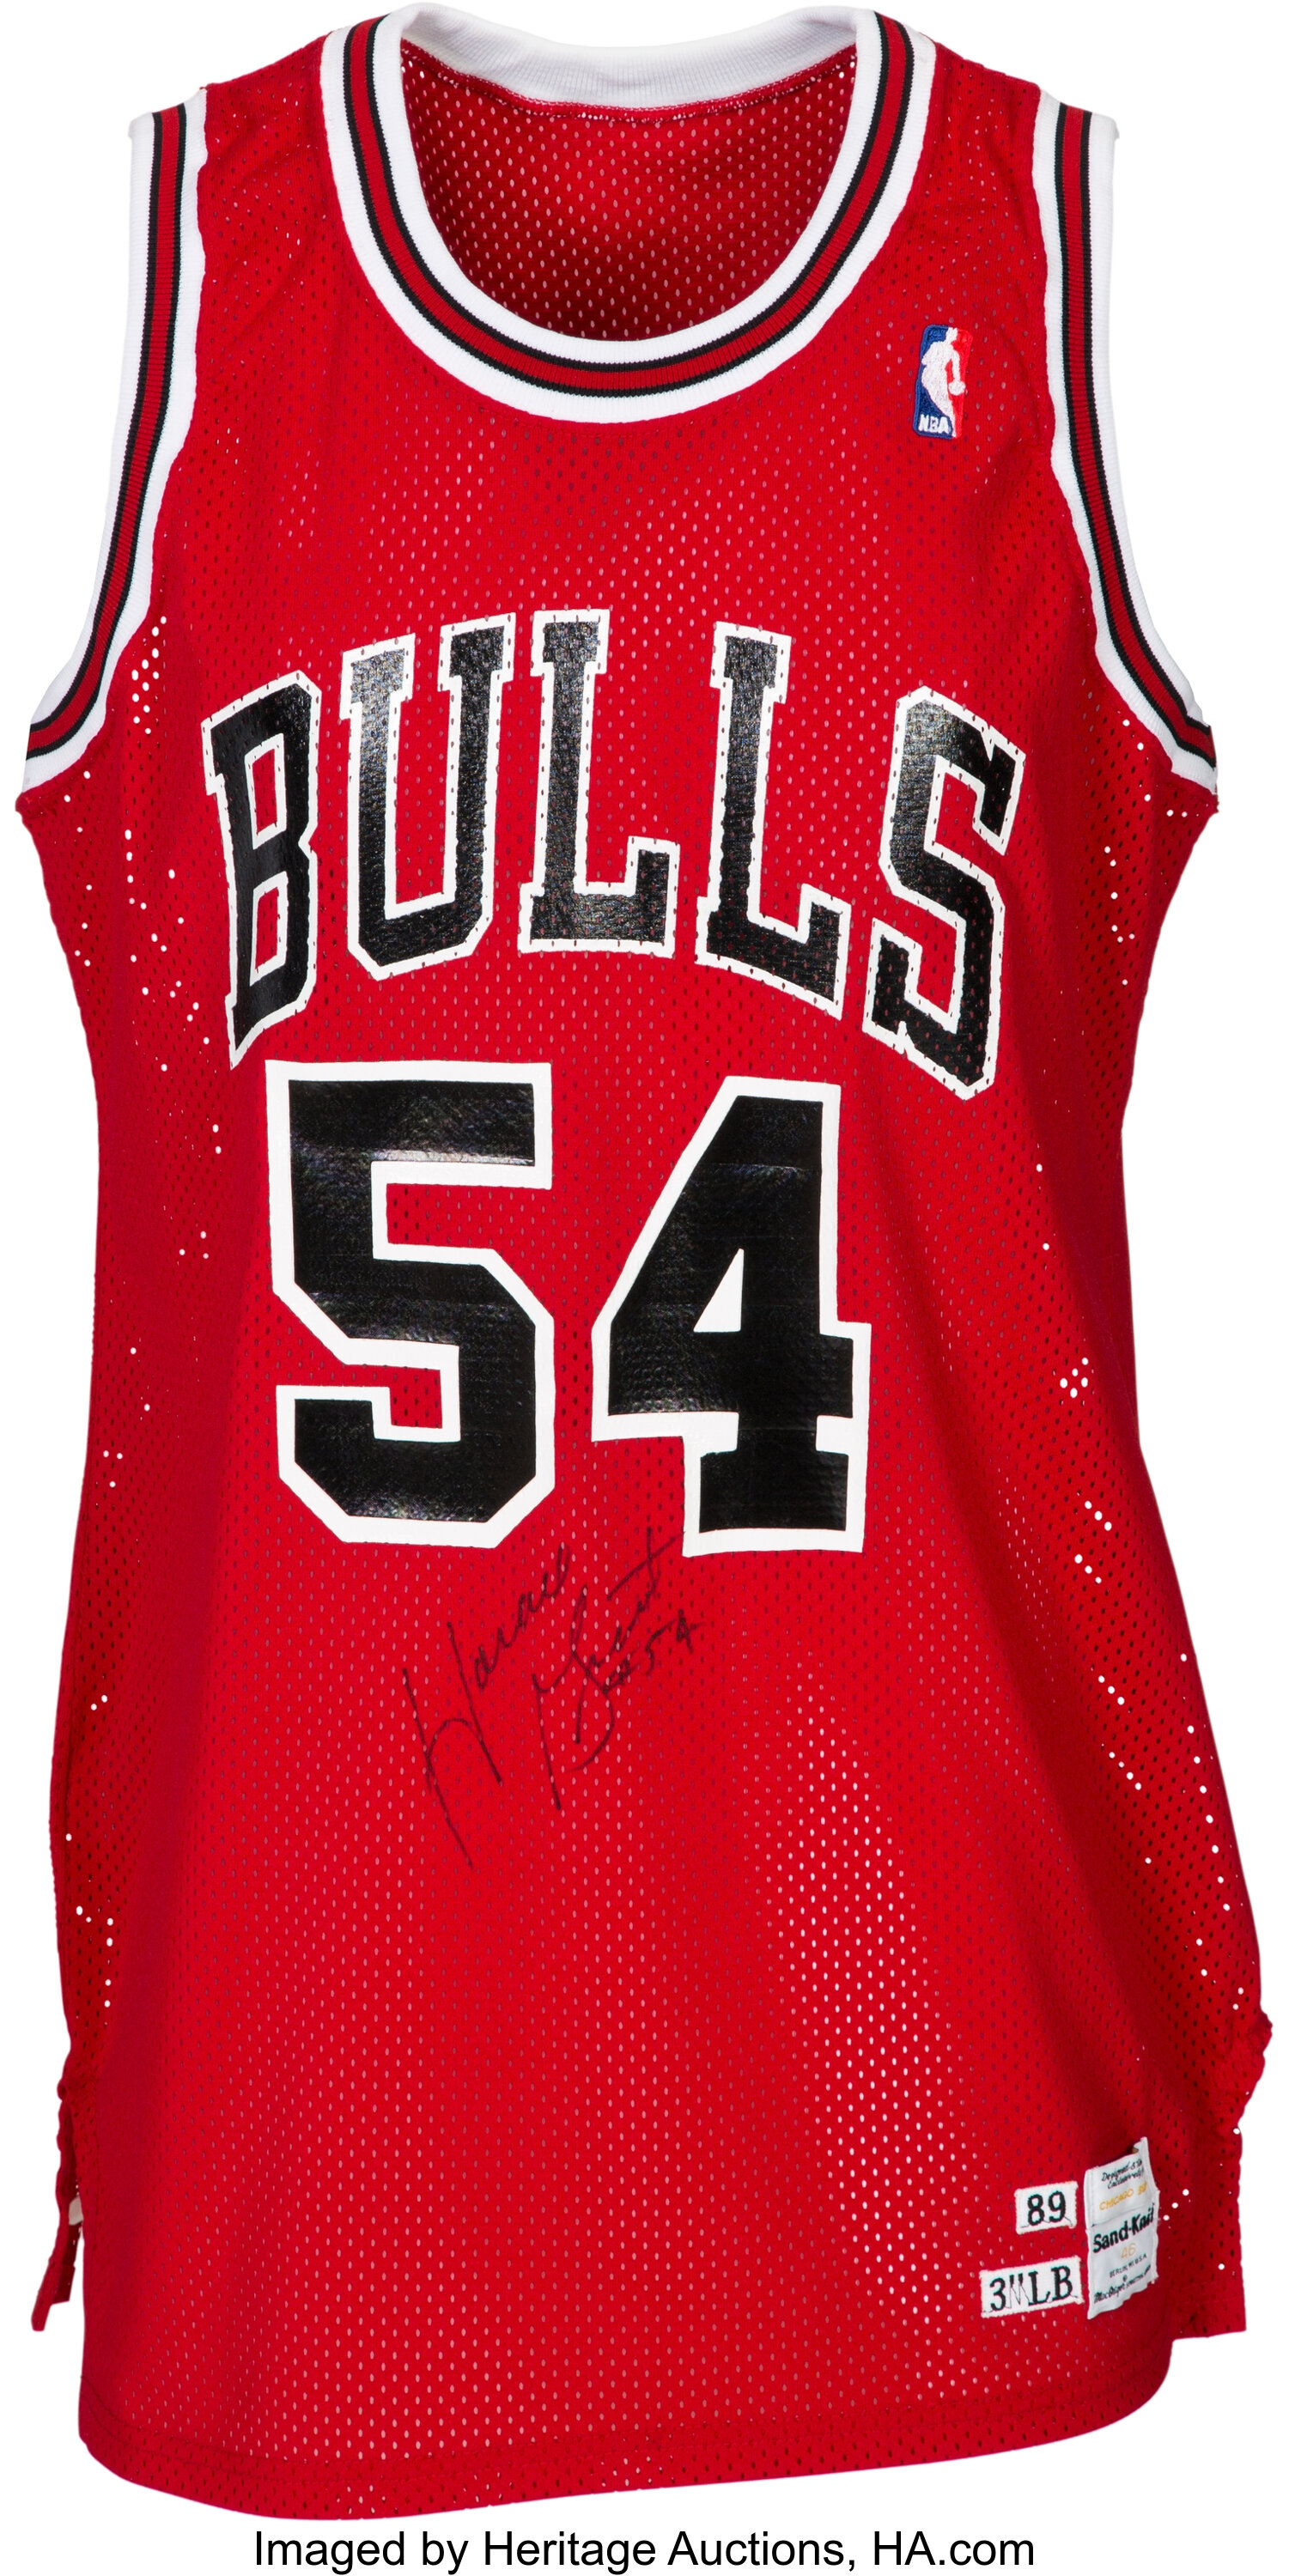 NBA Jersey Database, Chicago Bulls 1983-1985 Record: 65-99 (40%)